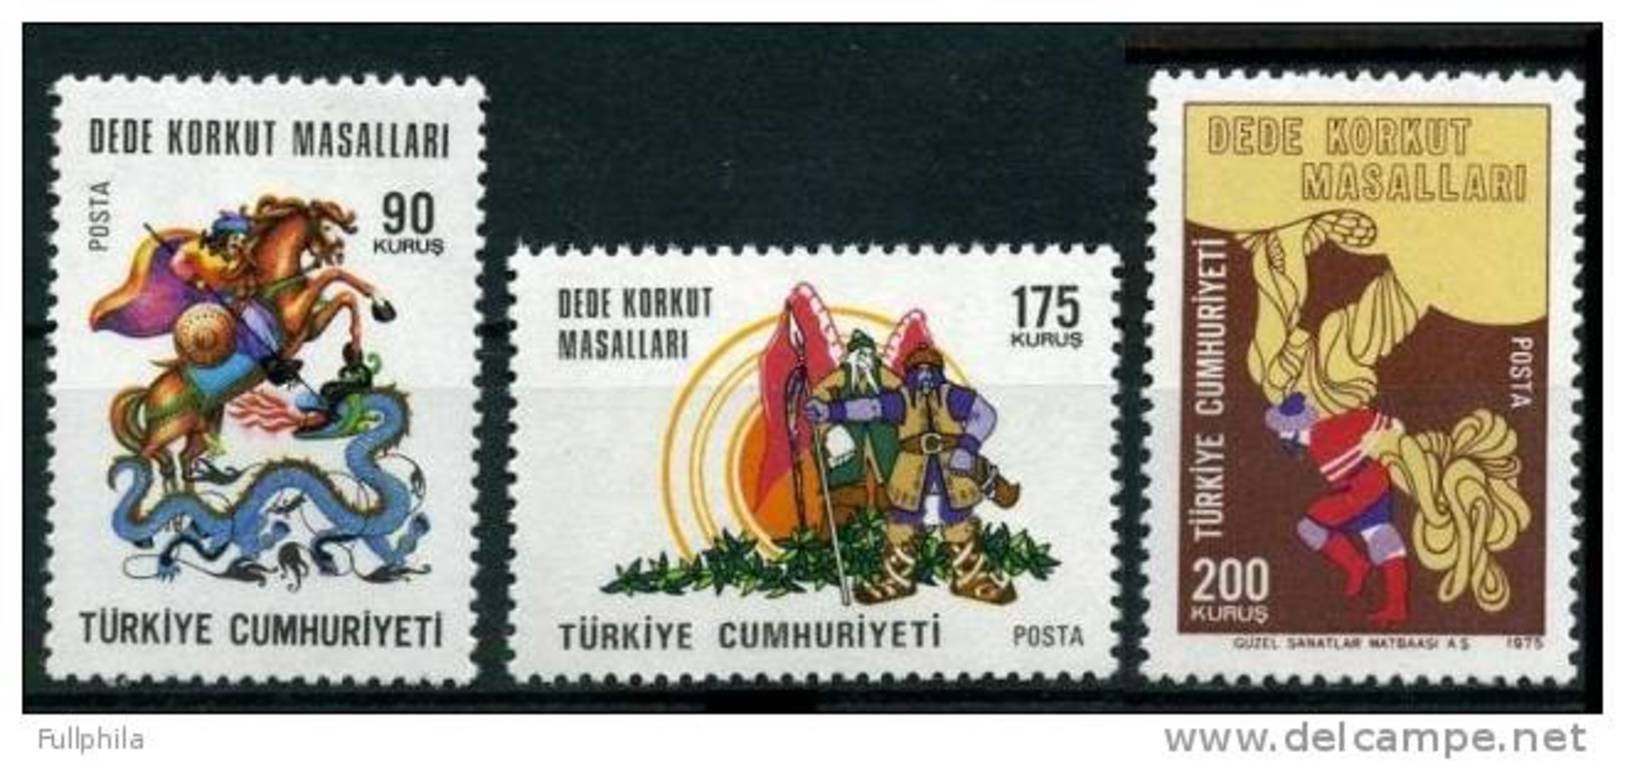 1975 TURKEY TALES OF DEDE KORKUT MNH ** - Nuevos